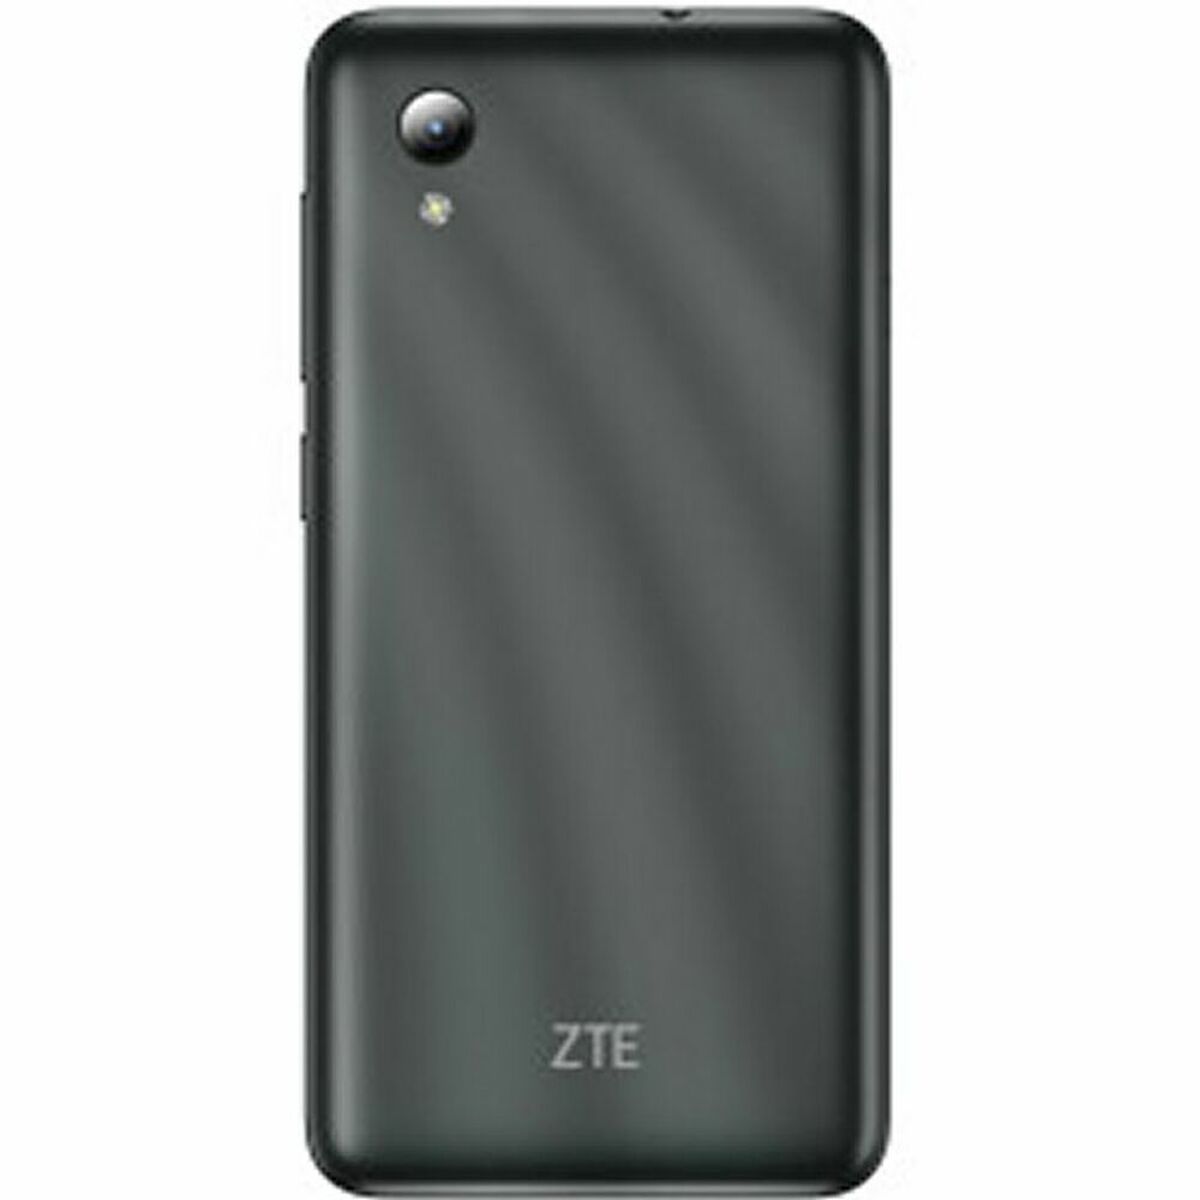 Smartphone ZTE 1 GB RAM 32 GB Black Grey 5" (Refurbished A)